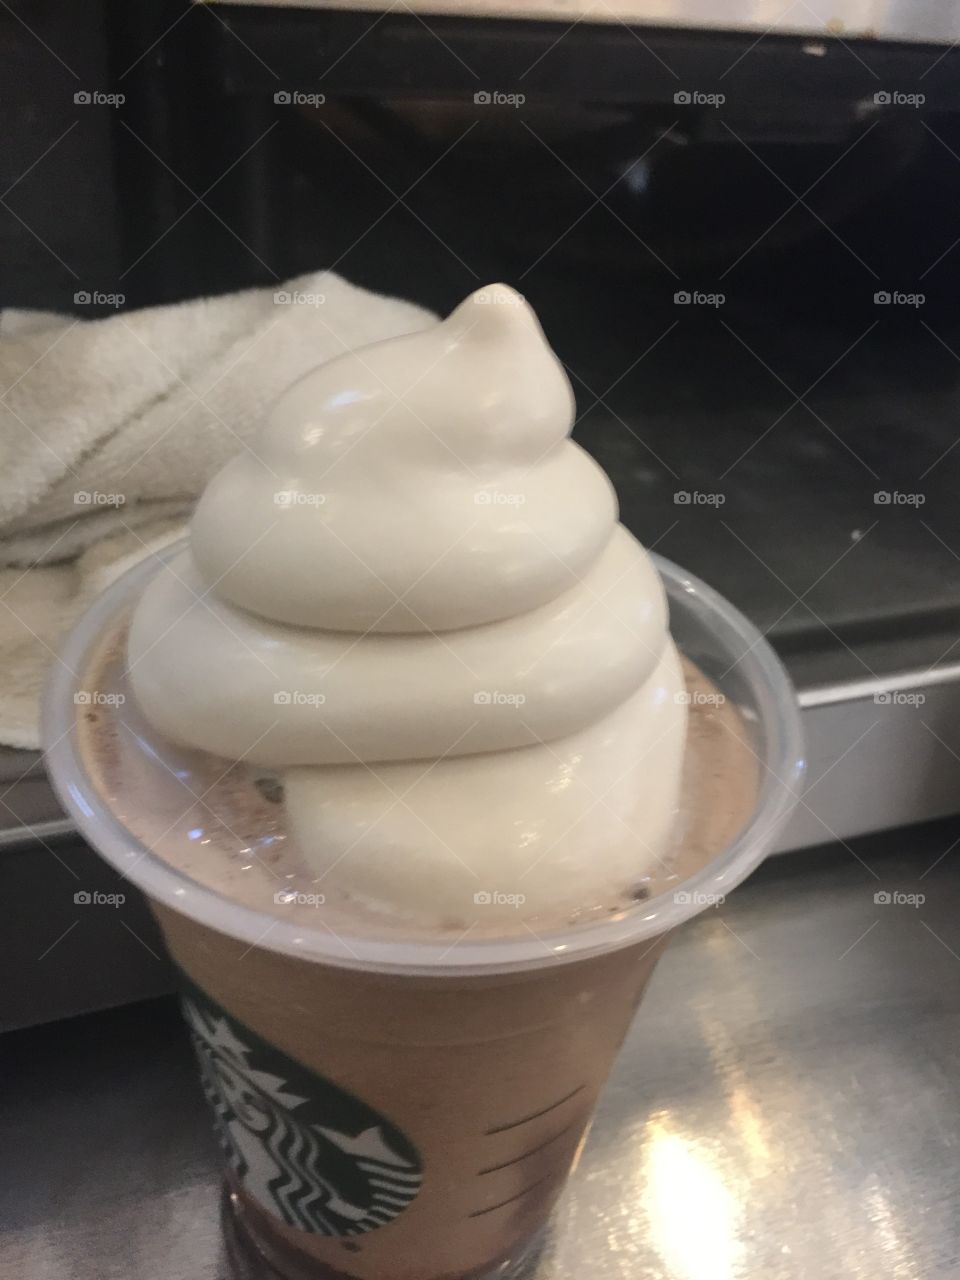 I make poop shaped whipped cream!